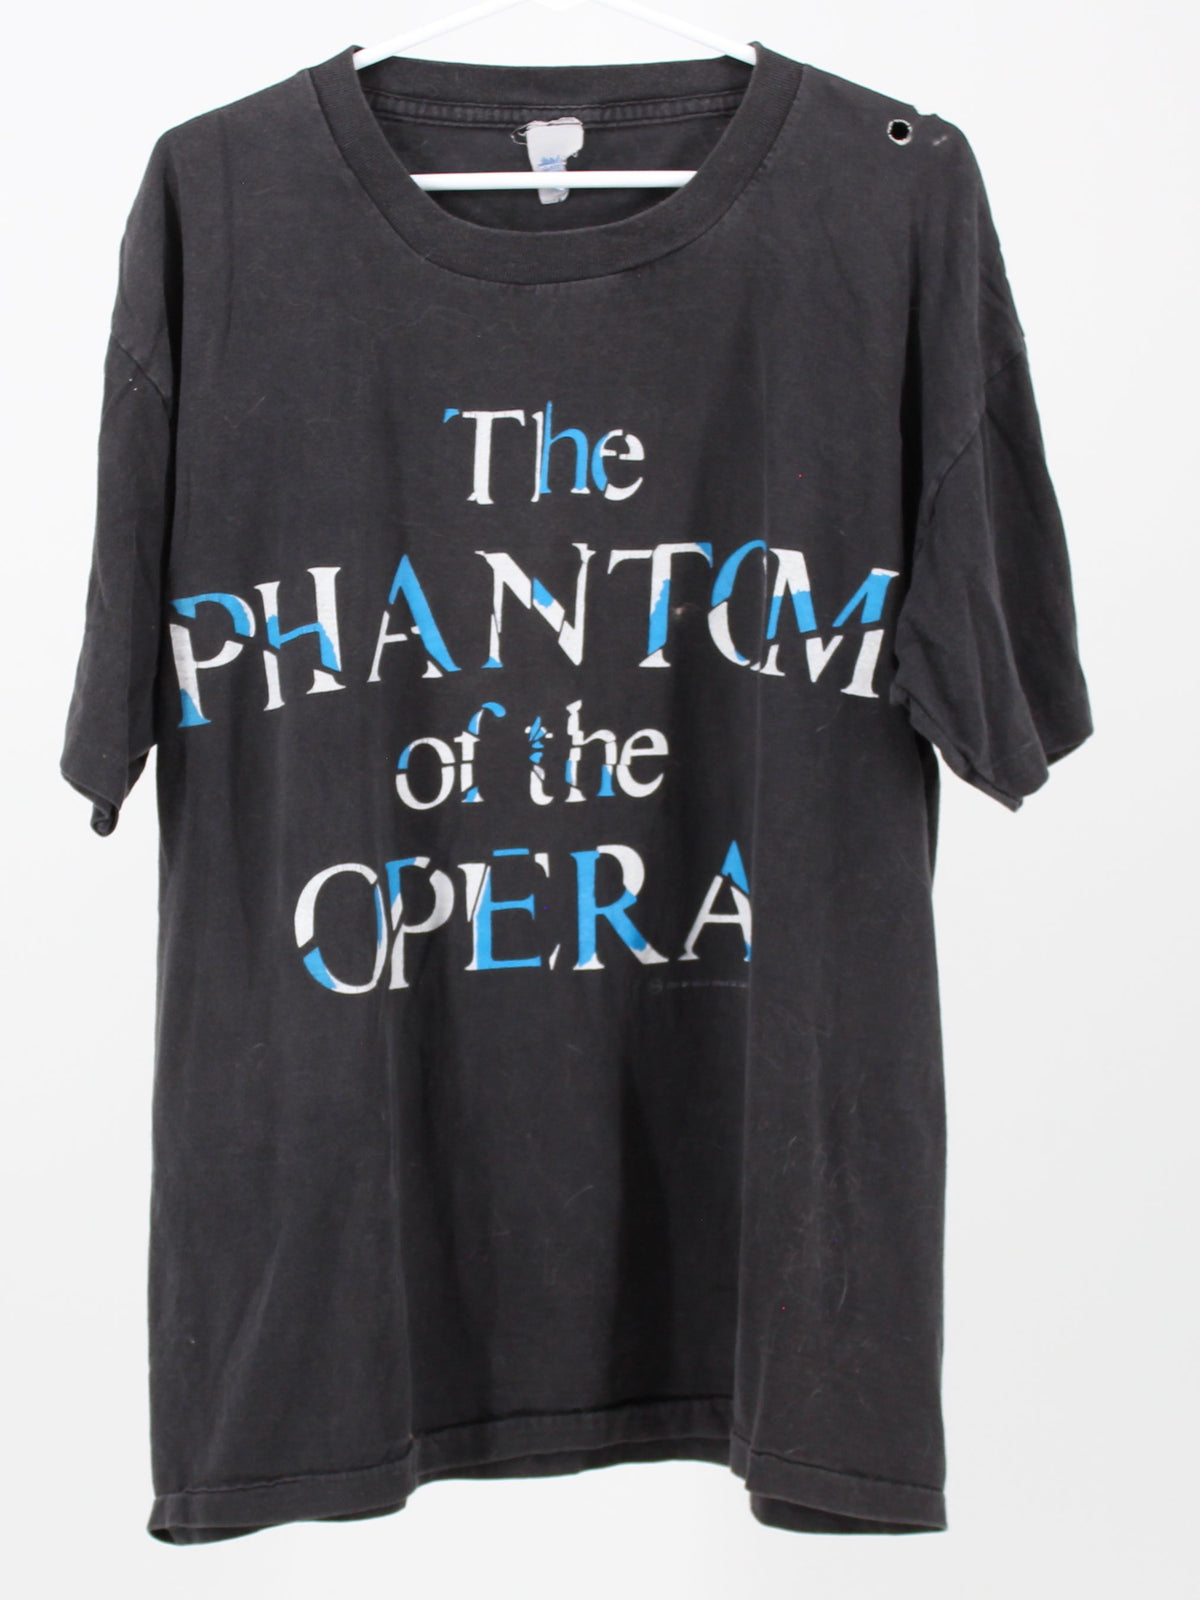 The Phantom of the Opera Chicago Tee